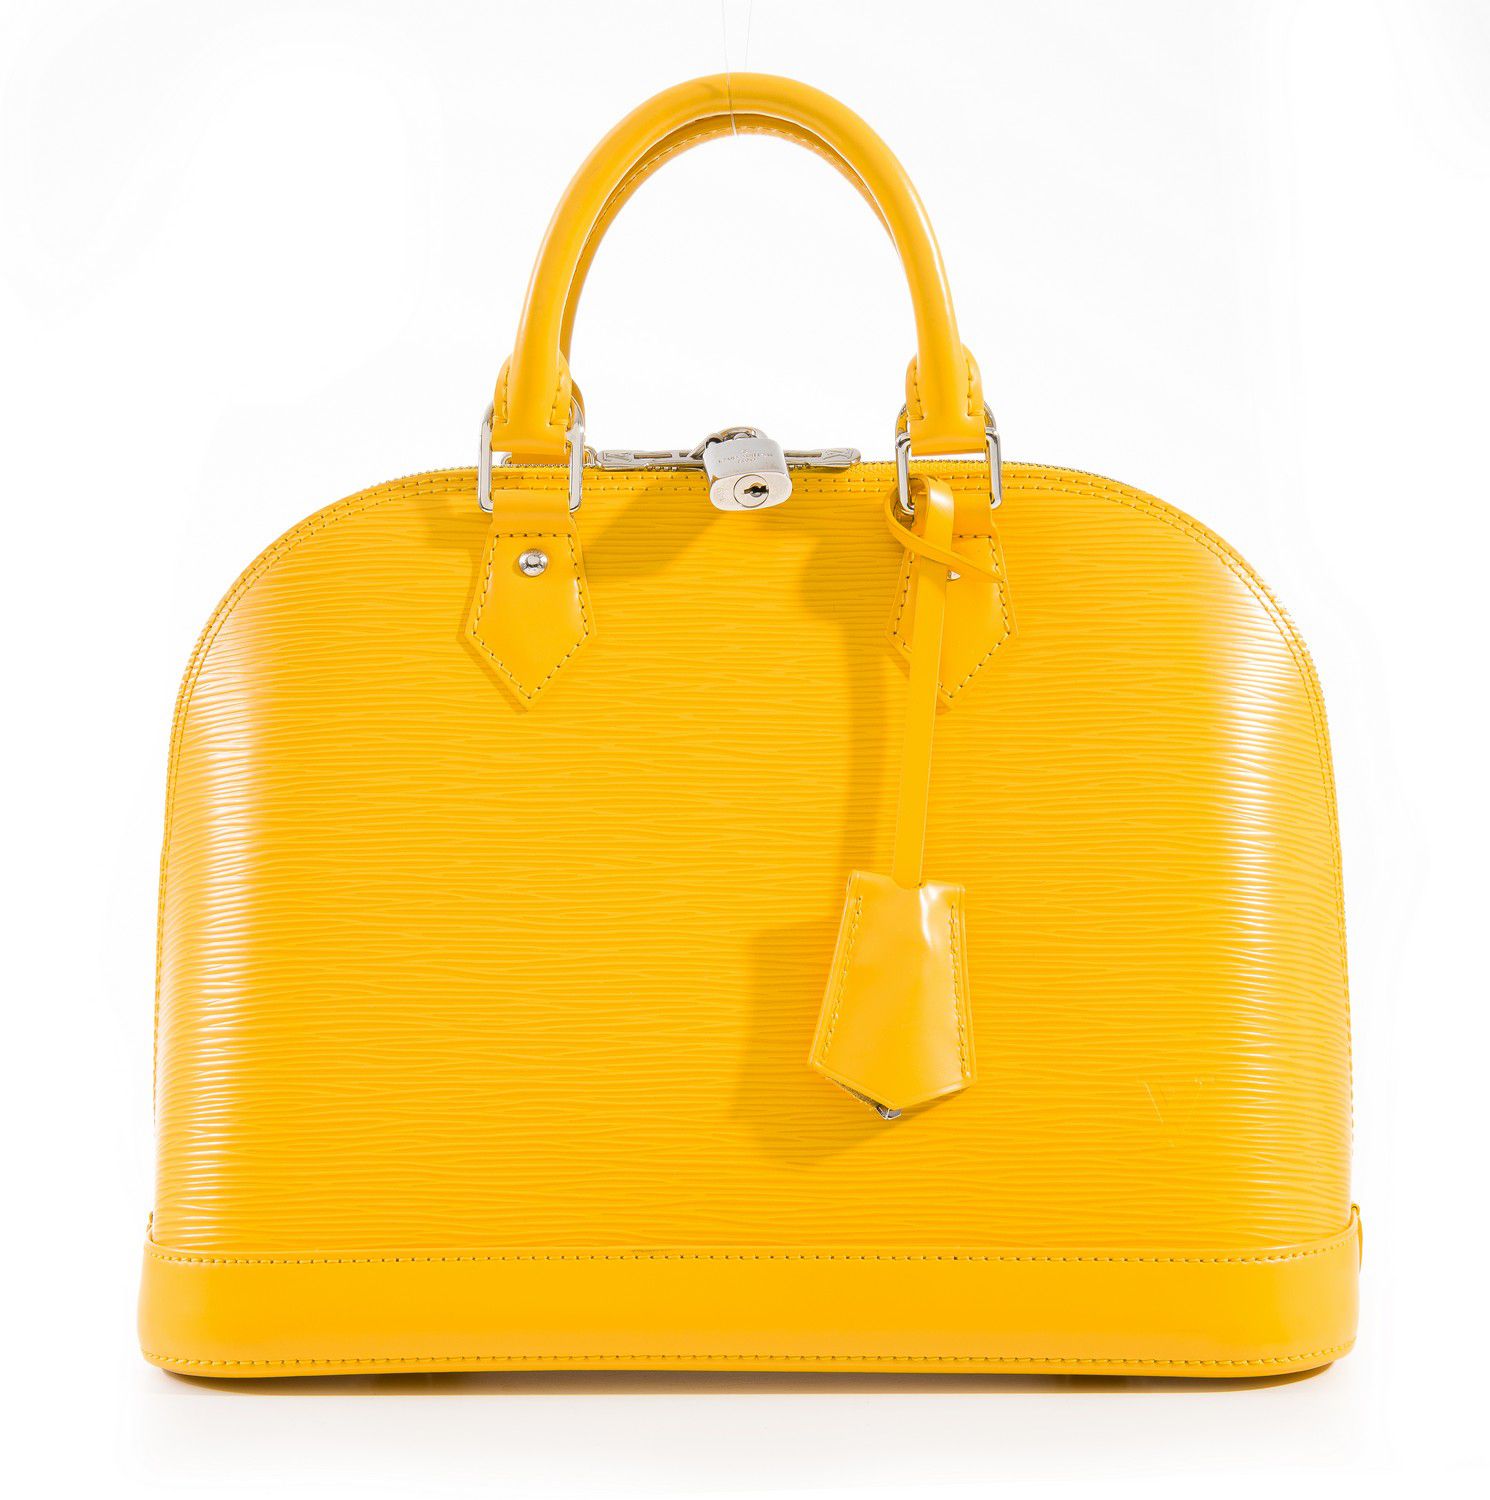 Louis Vuitton Yellow Bag Price Guide | IQS Executive